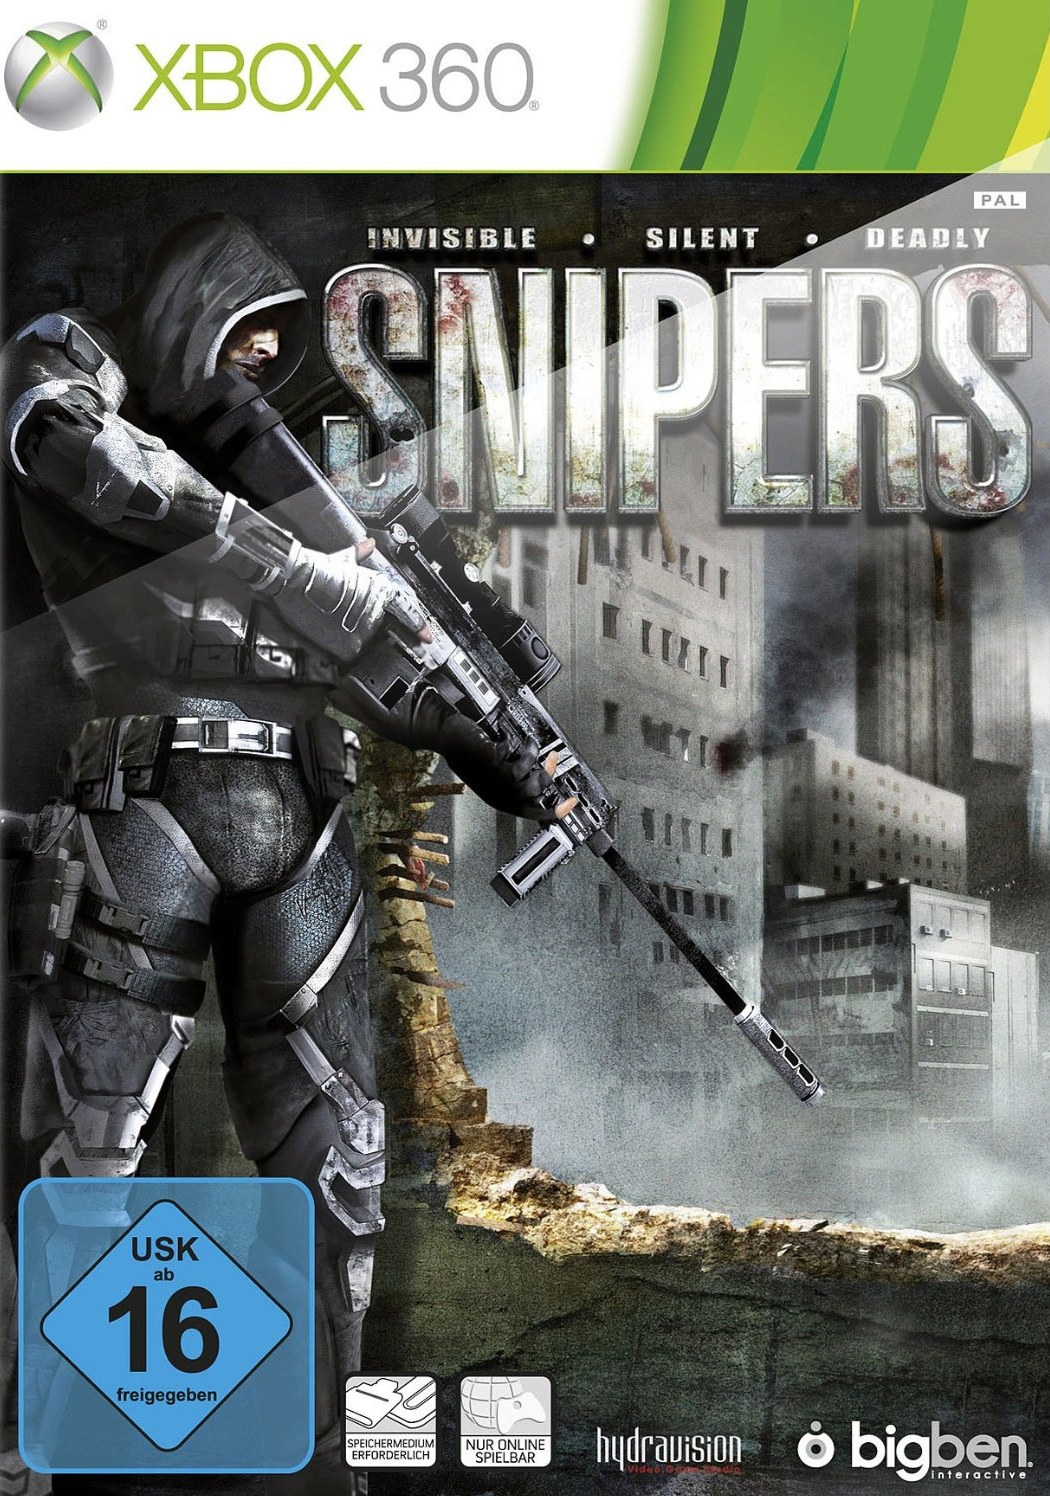 Bote de Snipers